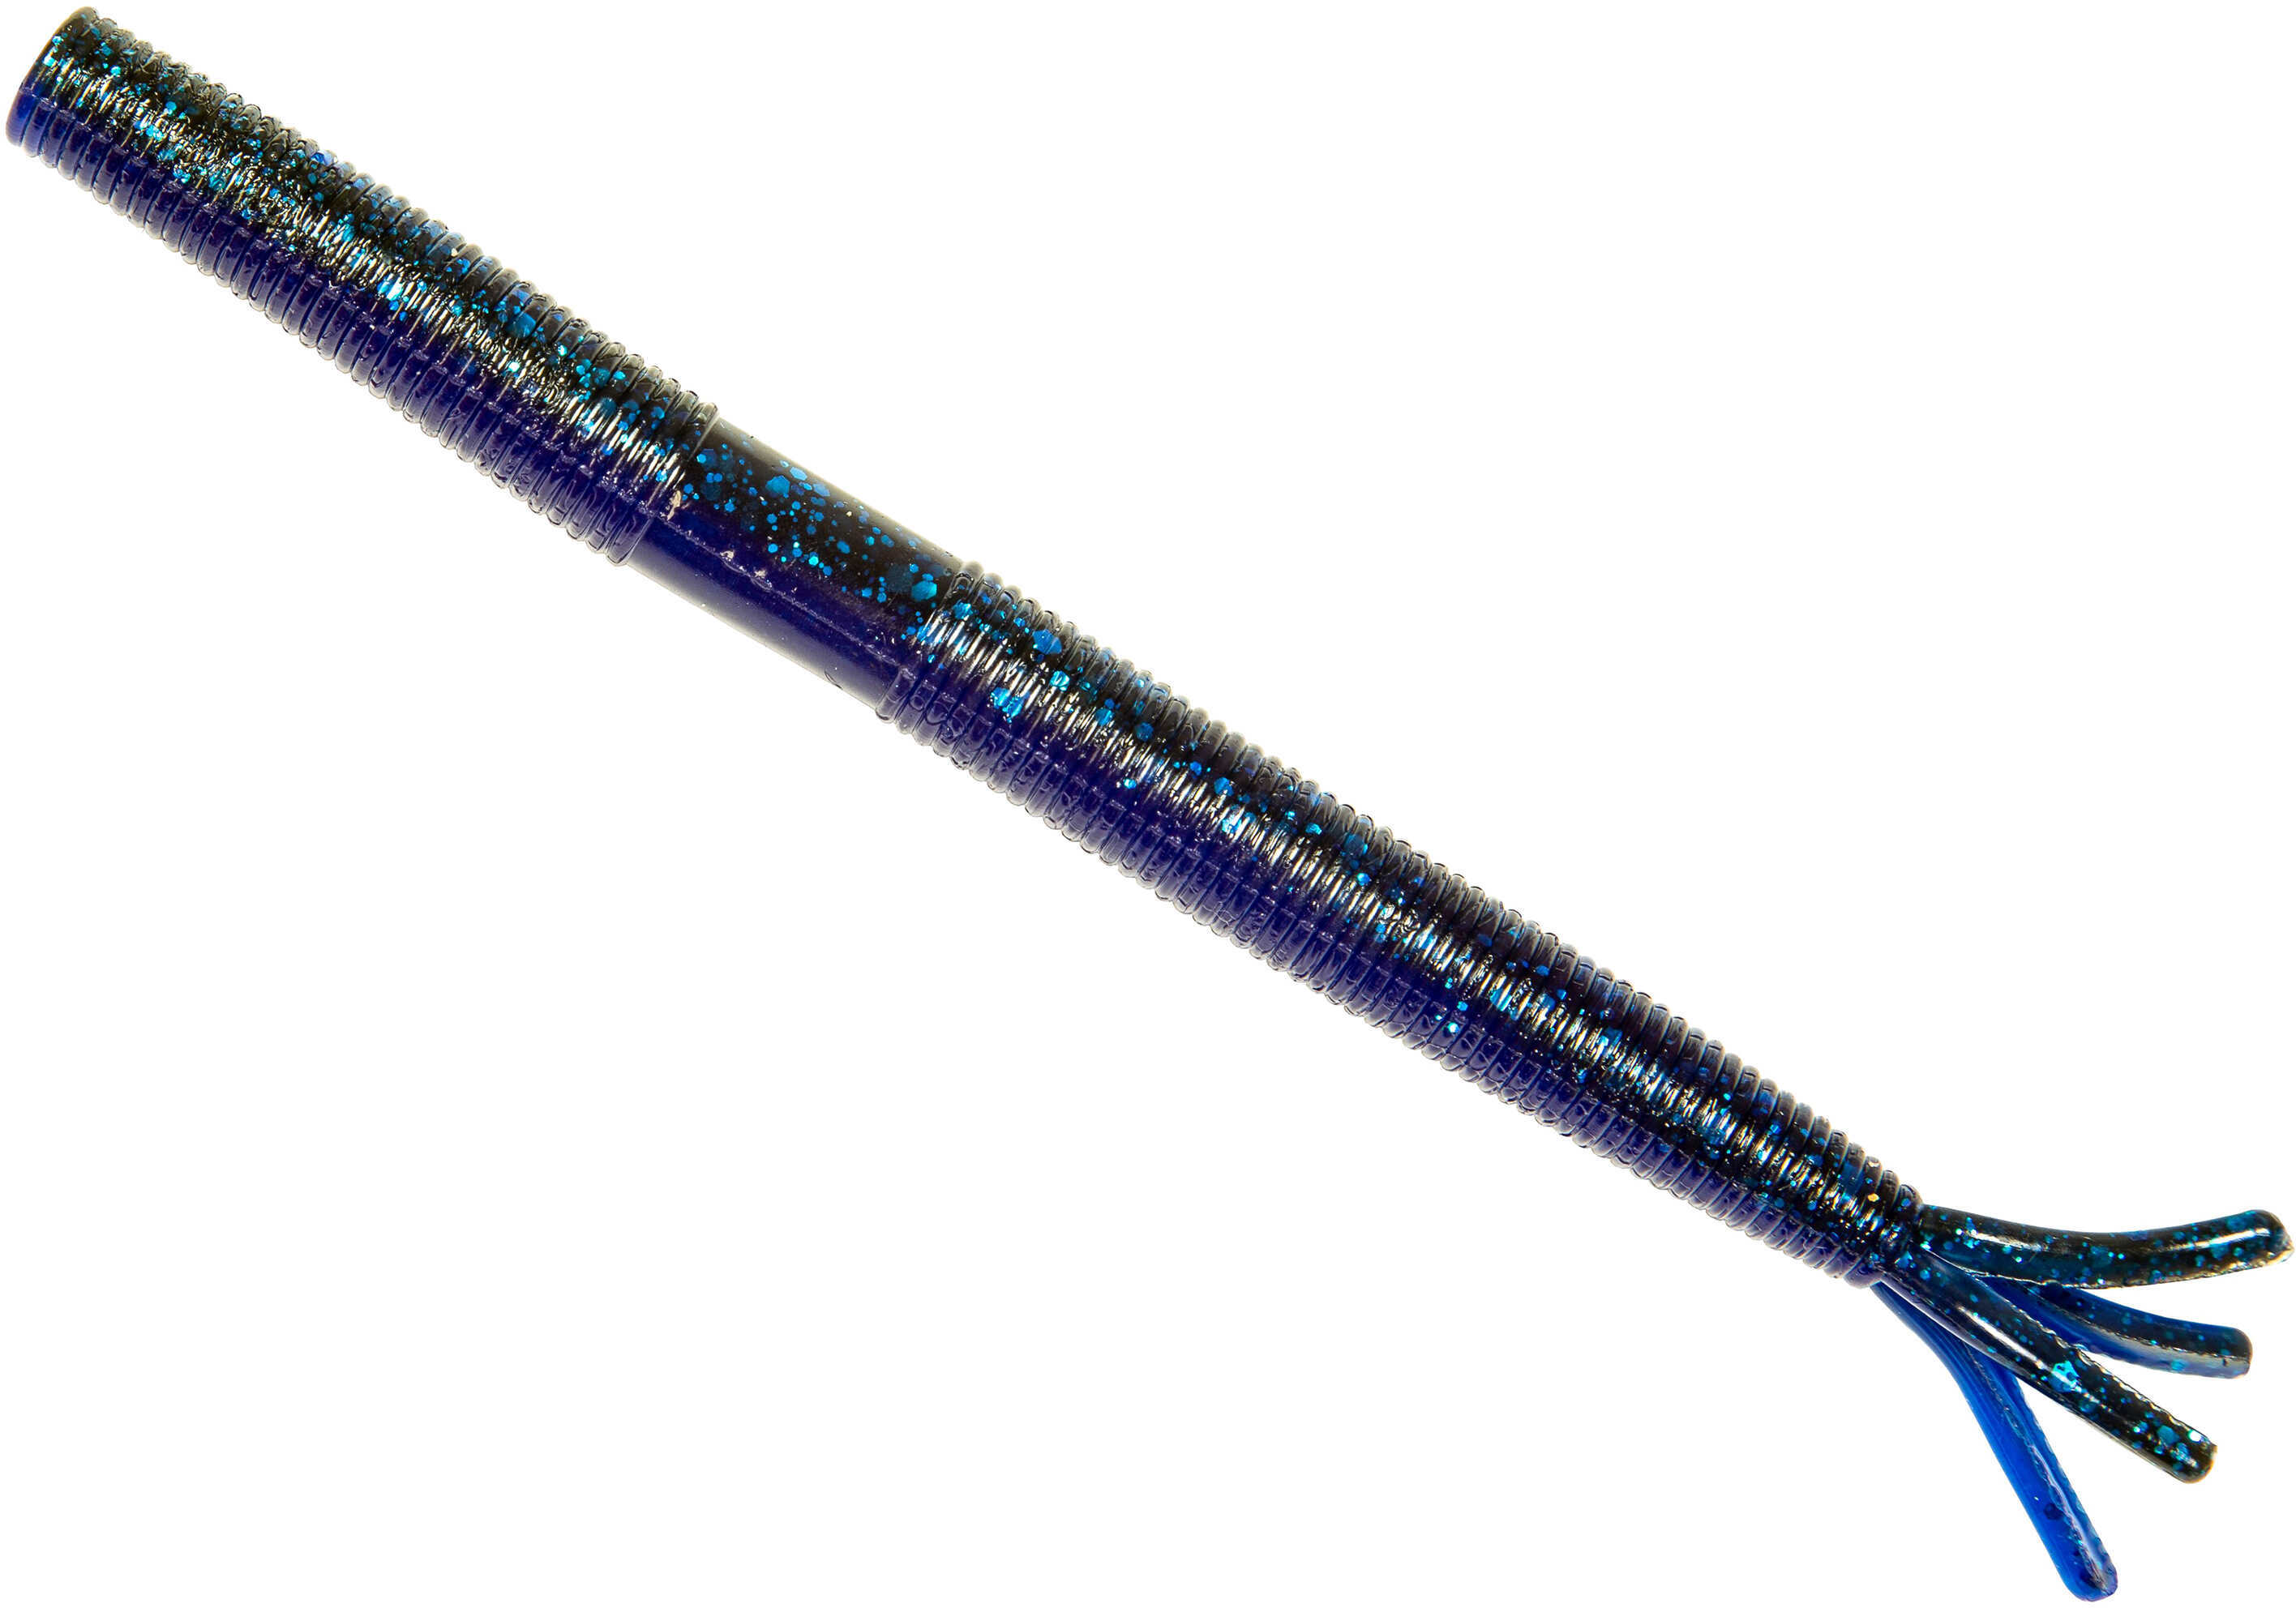 Z-man Bang Stickz Soft Bait 5 3/4" Length, Blacl/Blue Laminate, Package of 6